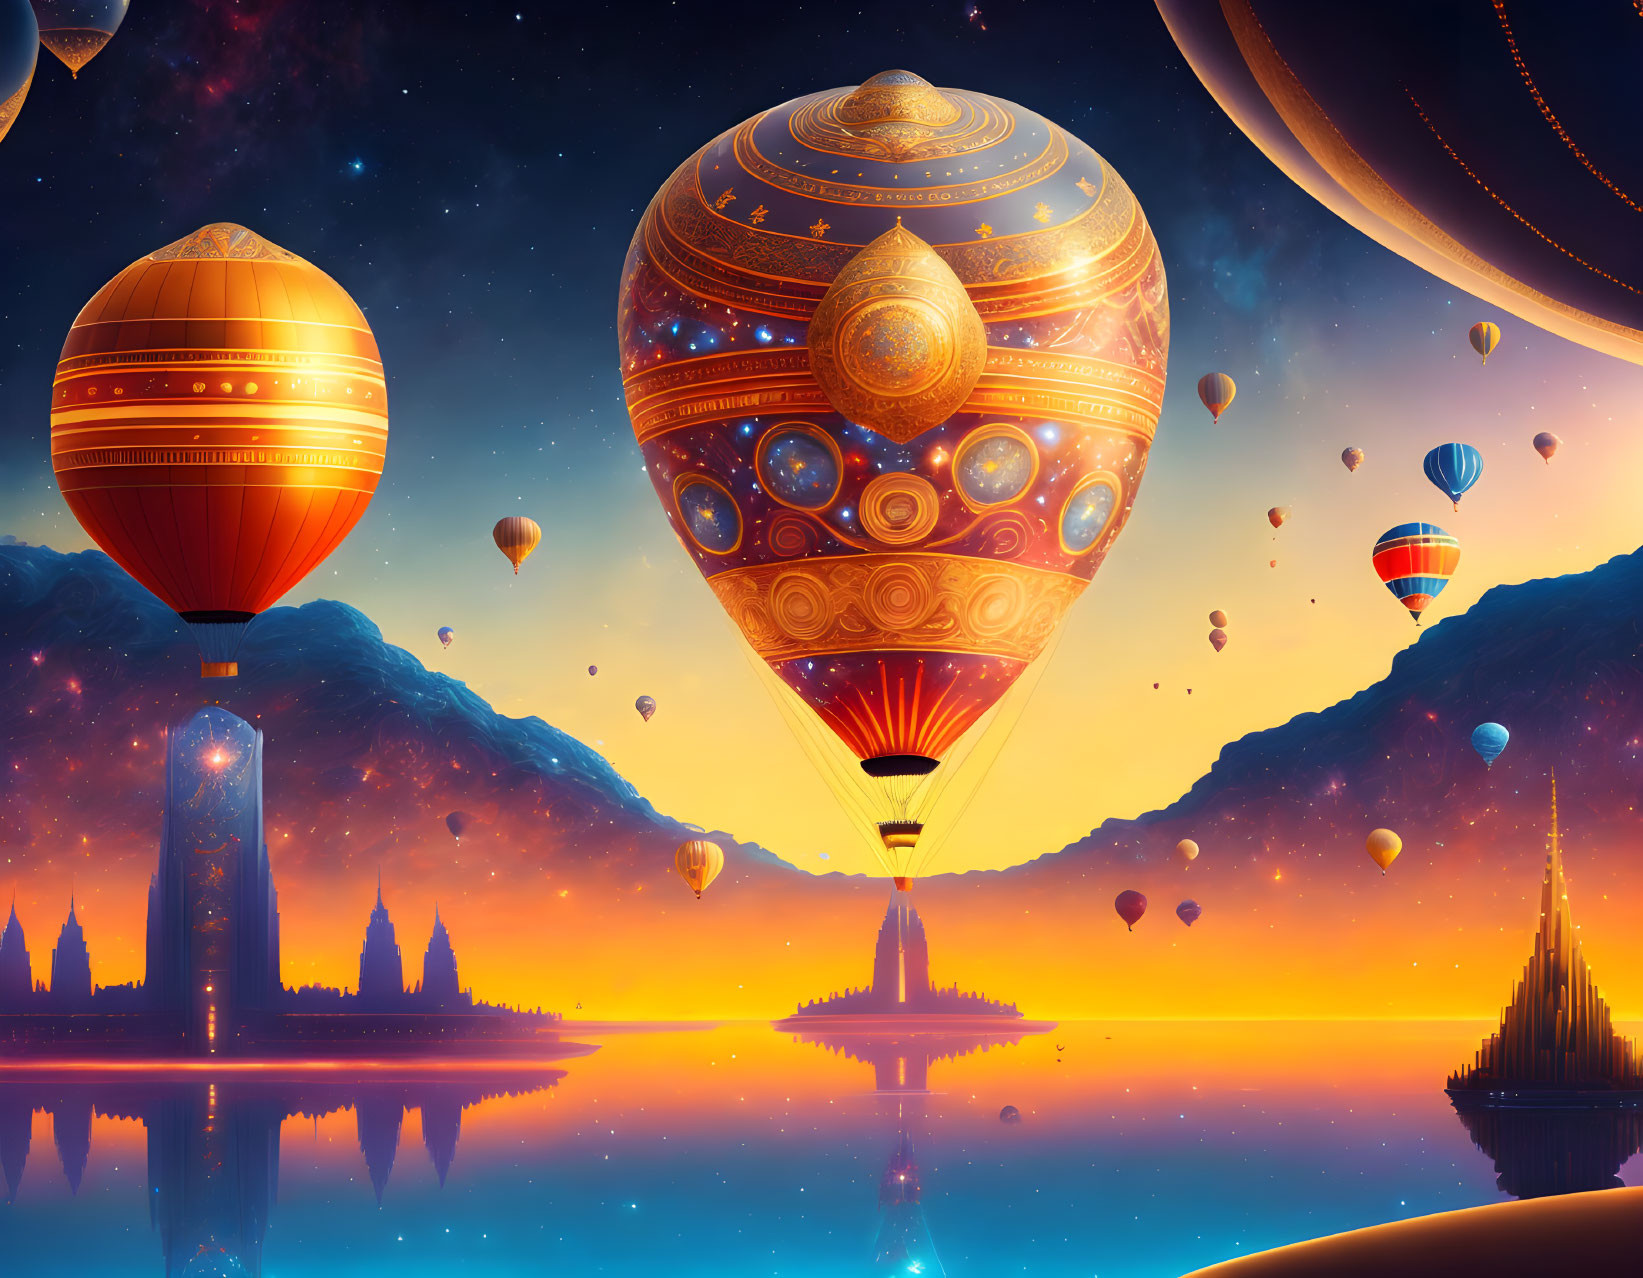 Colorful hot air balloons in futuristic sci-fi landscape